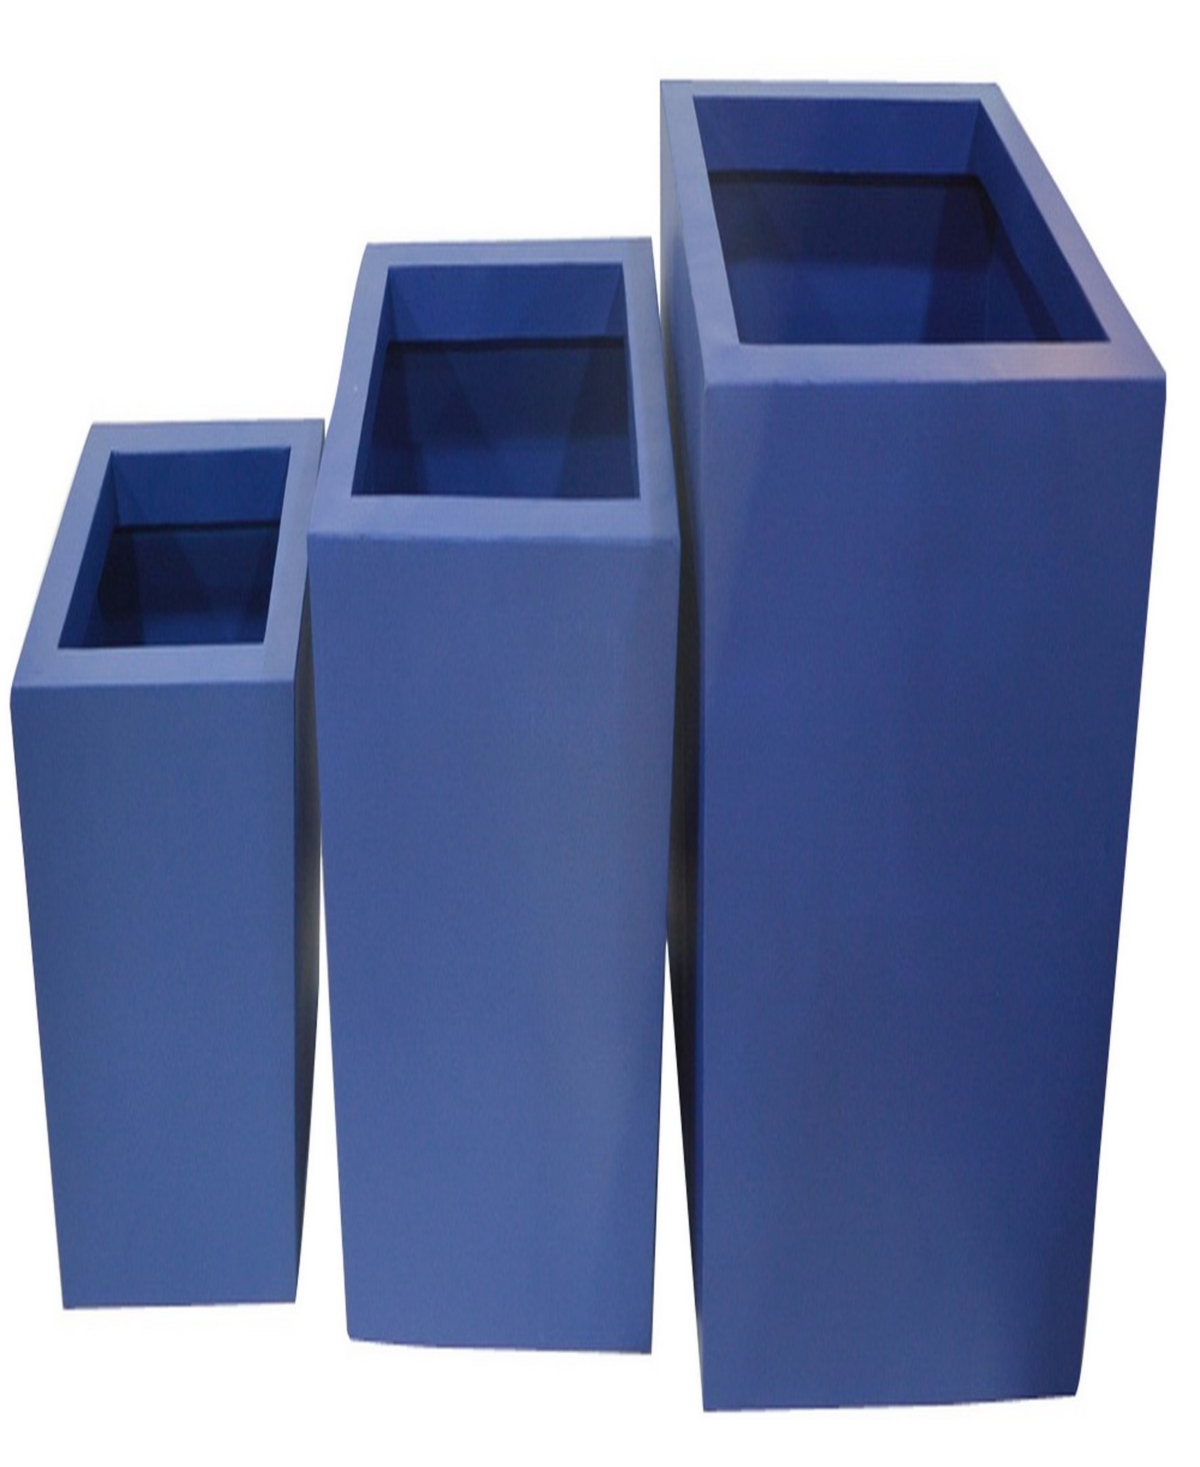 Set of 3 Modern Metal Planters - Blue